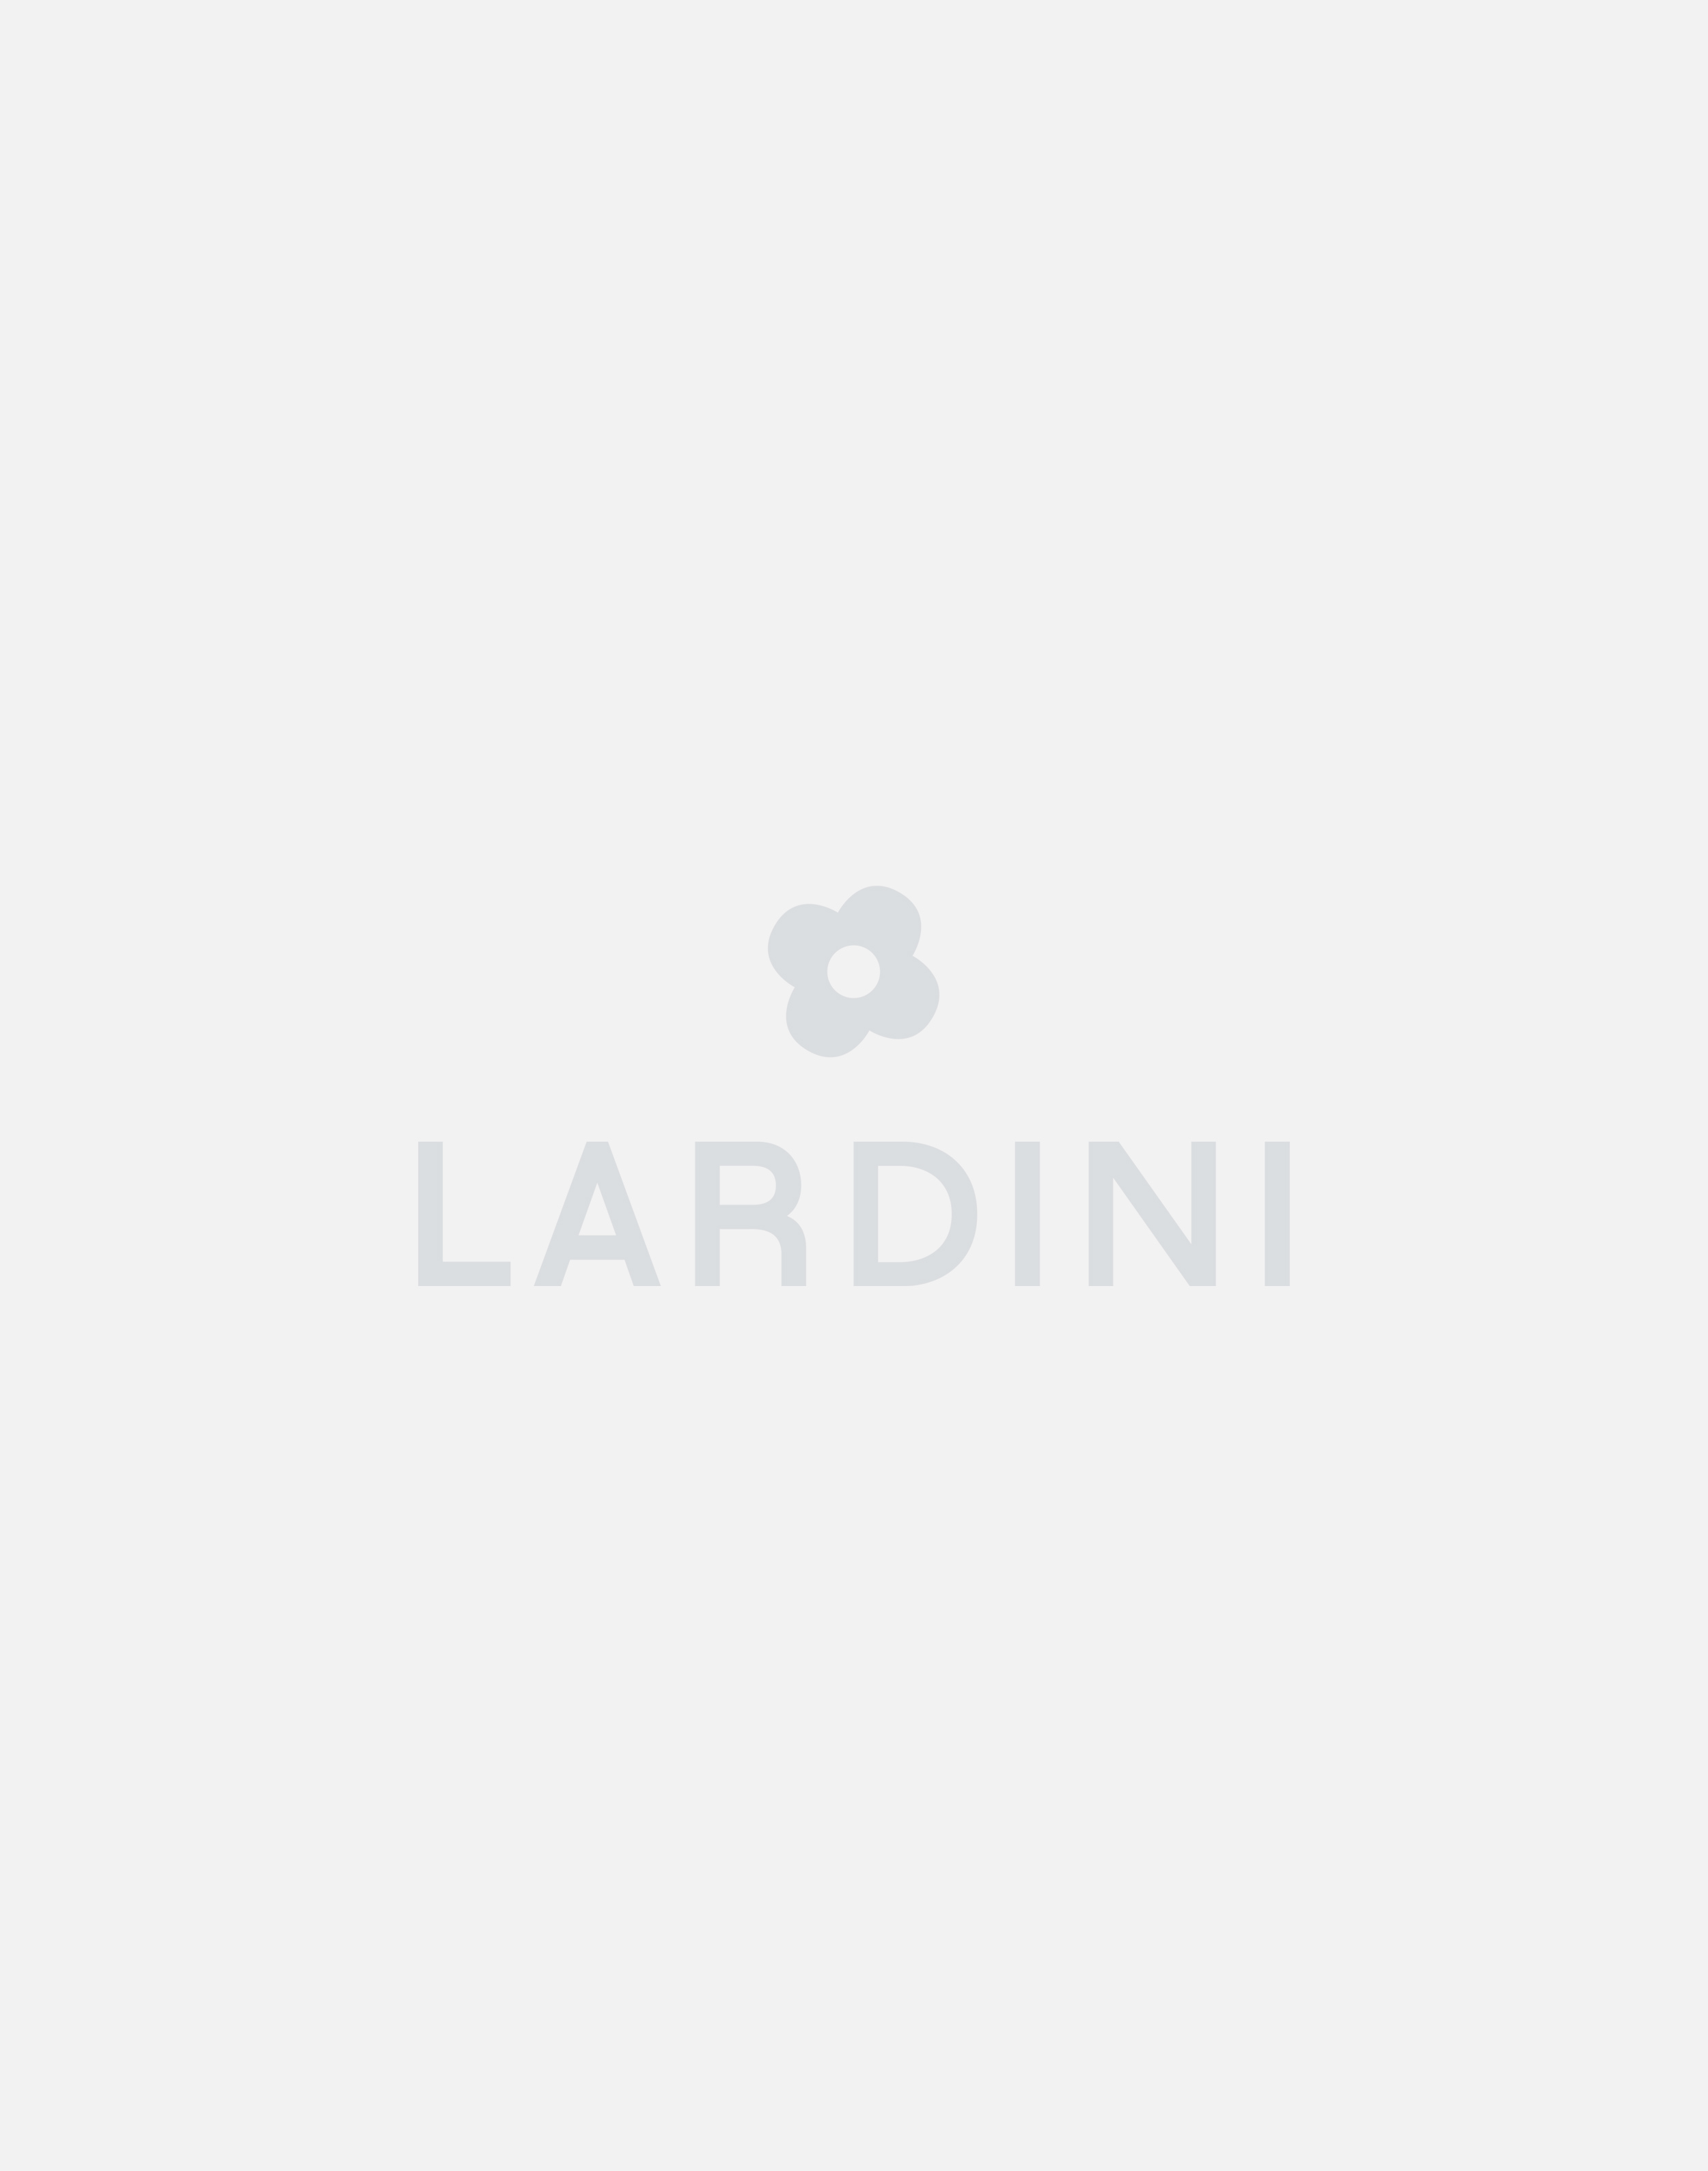 White V-neck sweater - Luigi Lardini capsule 4